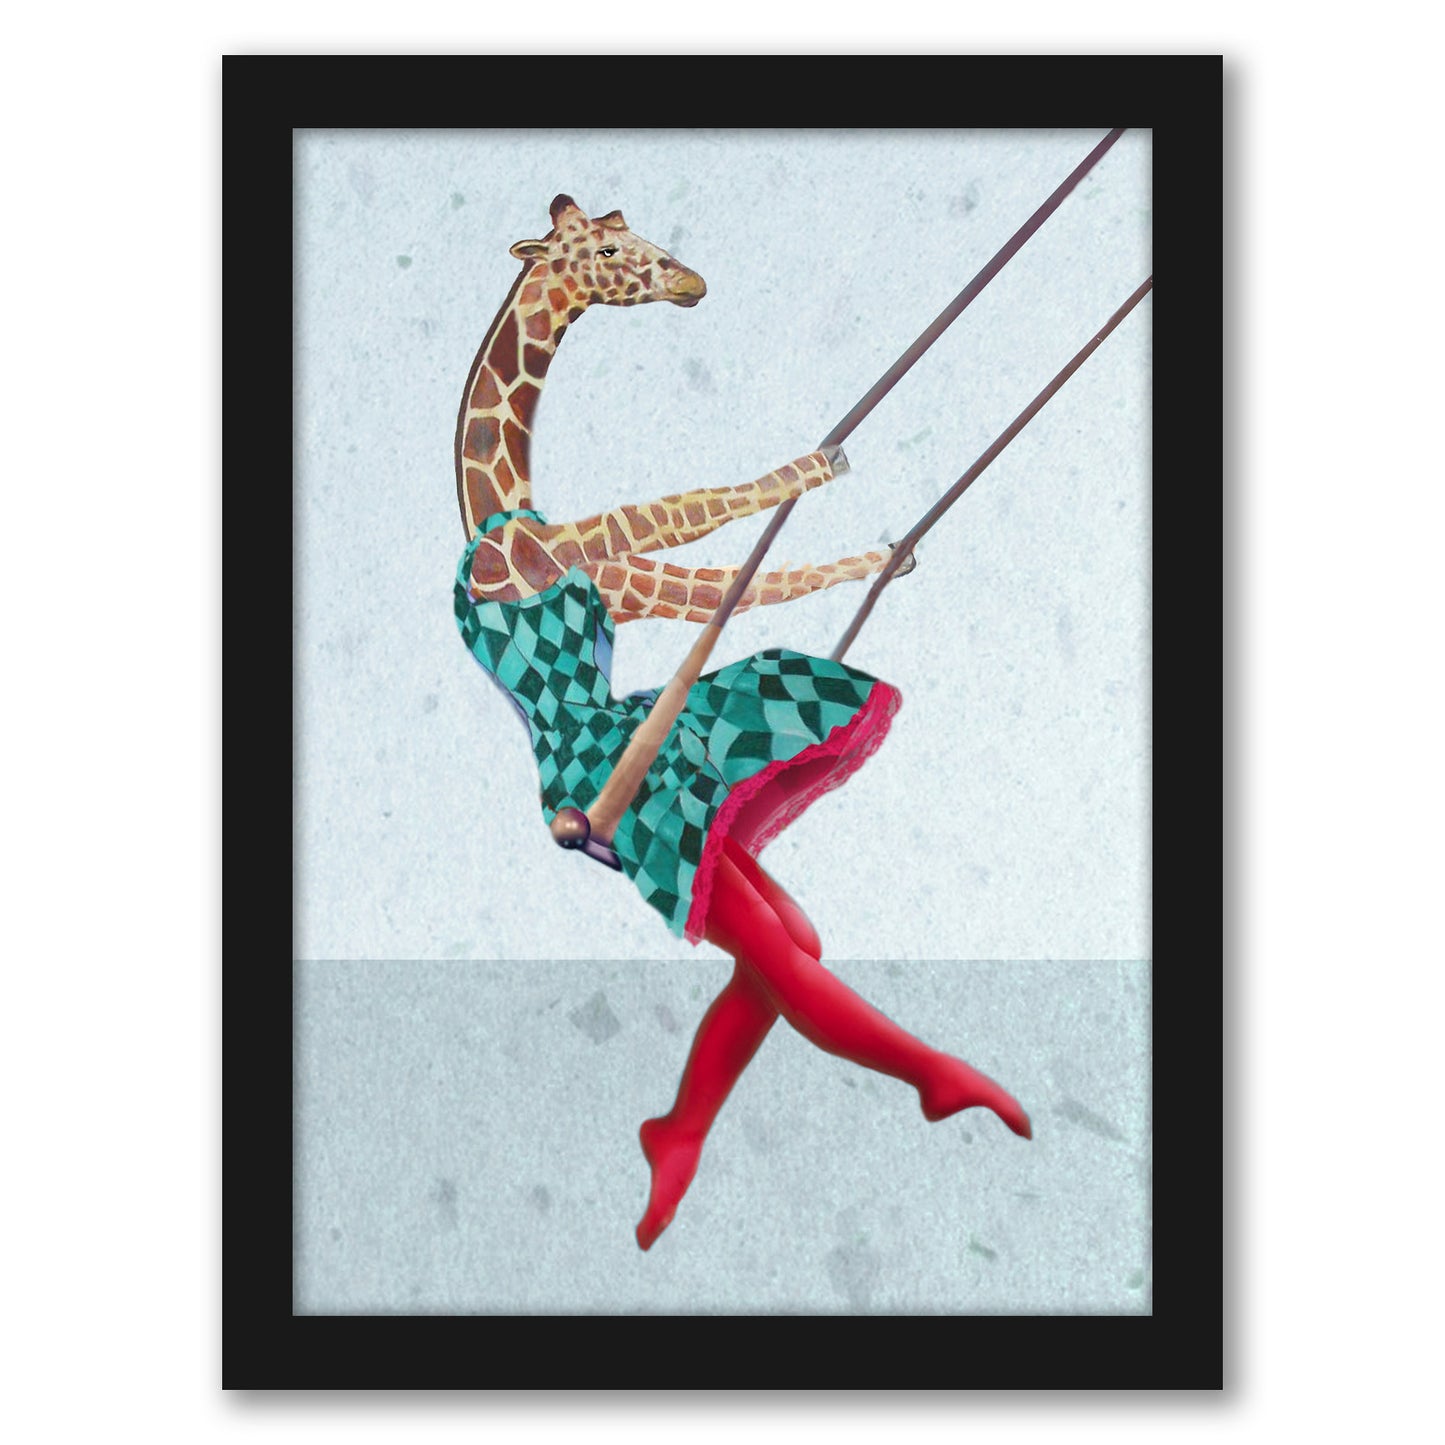 Giraffe On A Swing By Coco De Paris - Framed Print